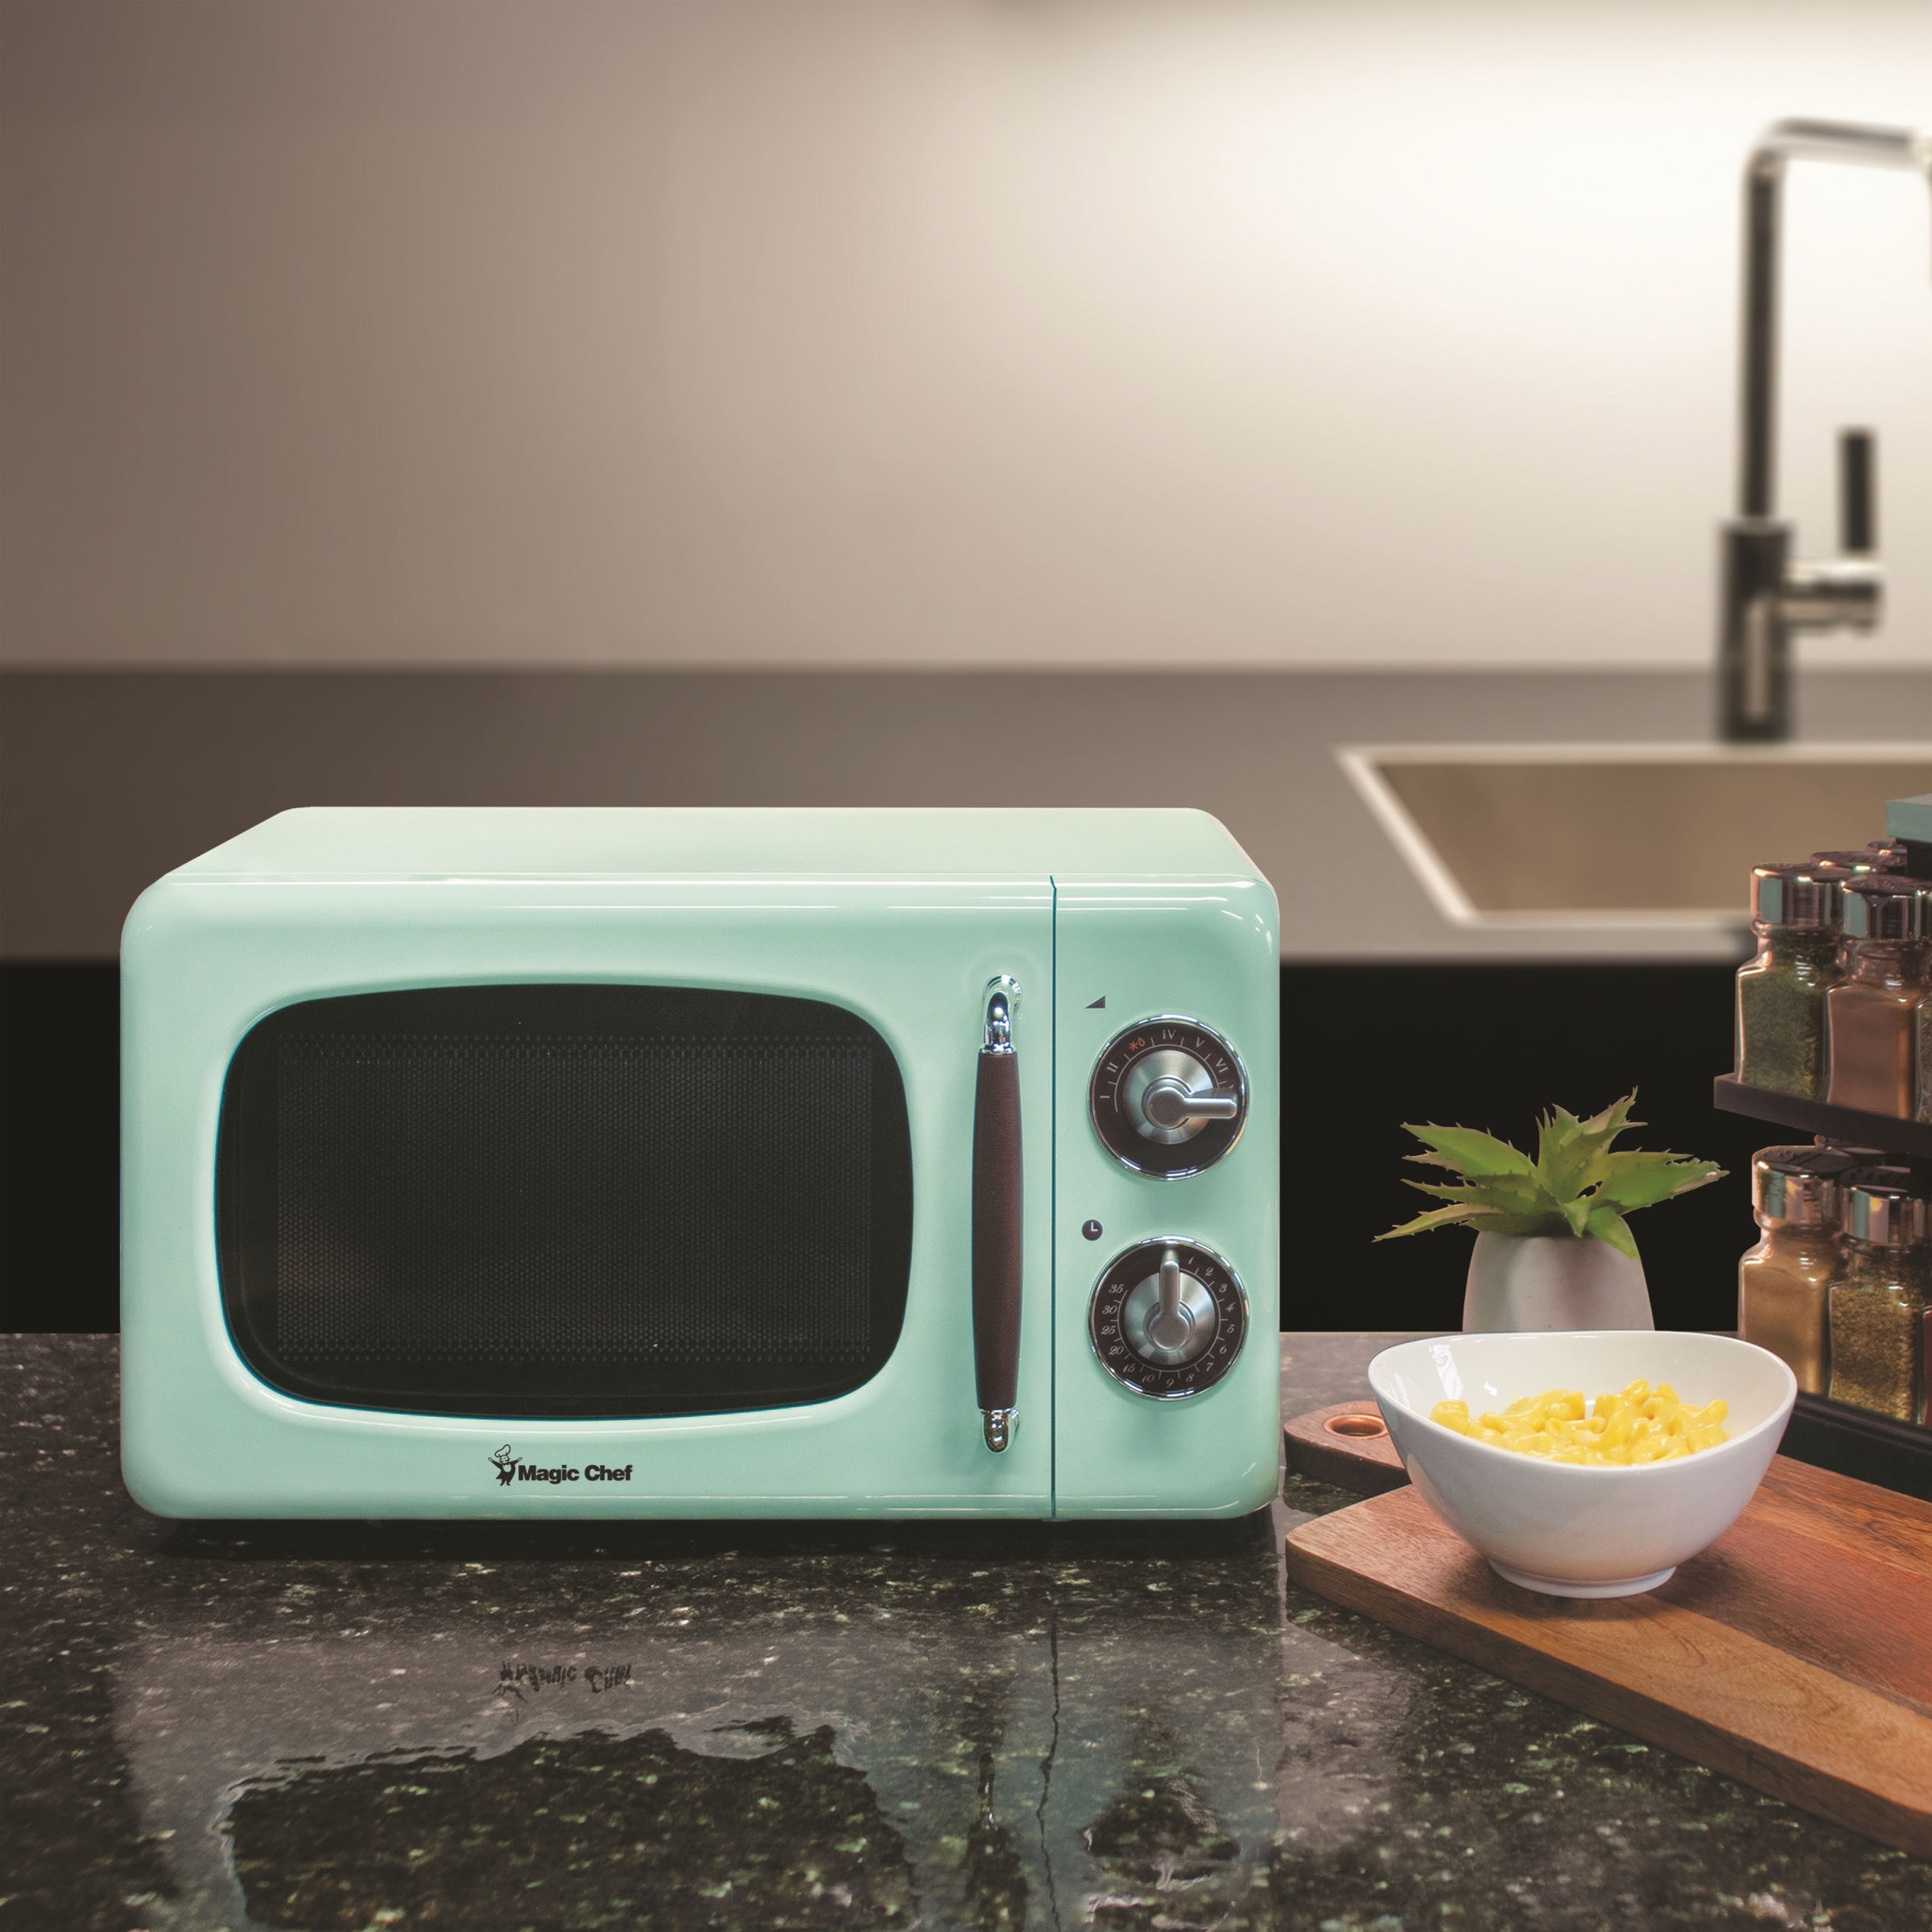 0.7 Cu ft New Magic Chef 700 Watt Countertop Microwave in Mint Green - image 3 of 5